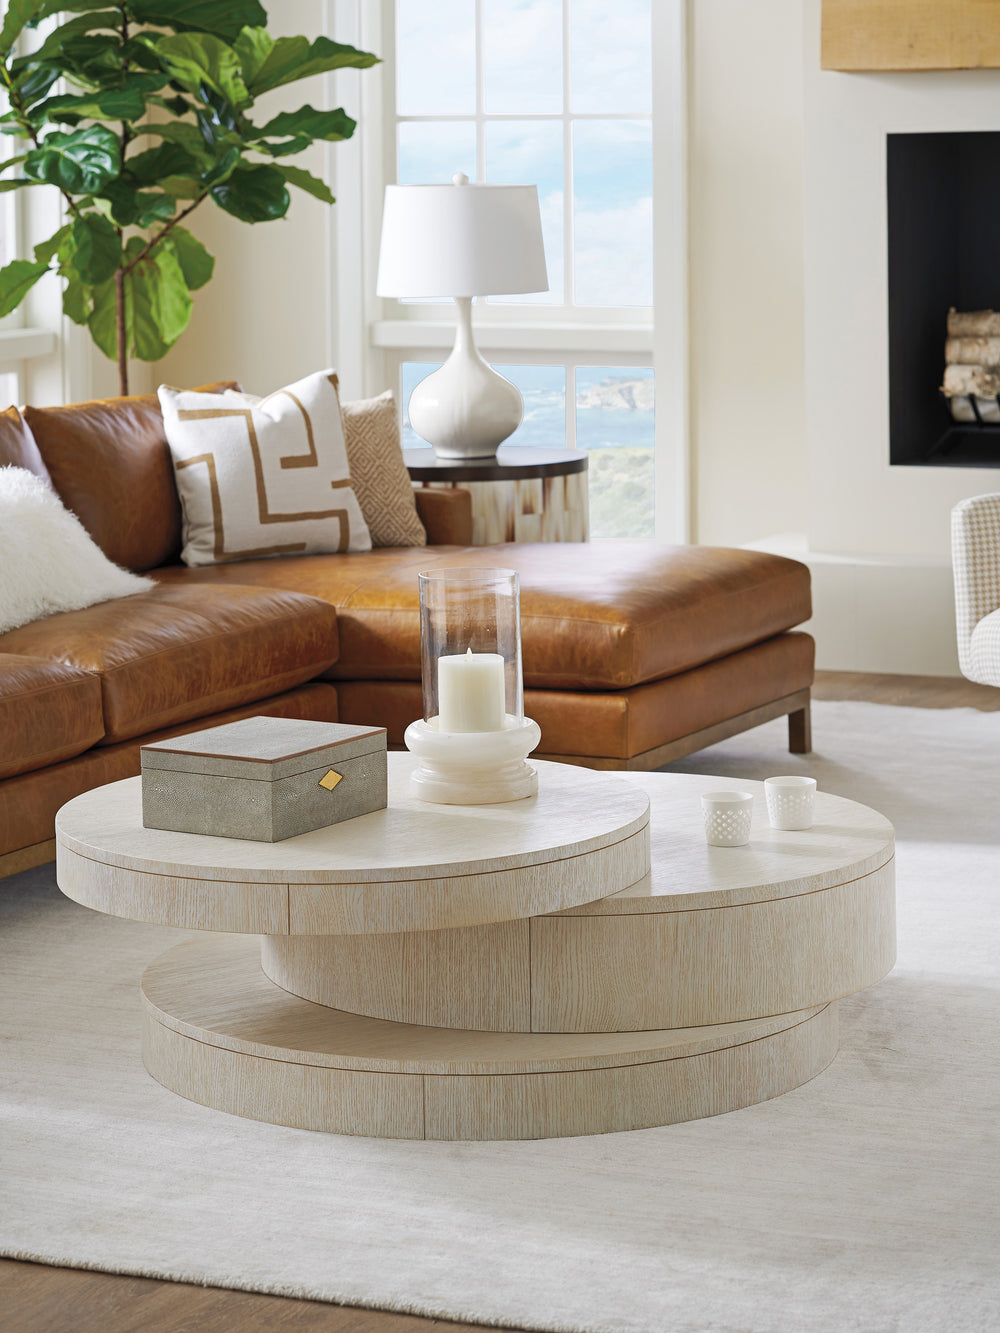 American Home Furniture | Barclay Butera  - Carmel Ventana Round Cocktail Table